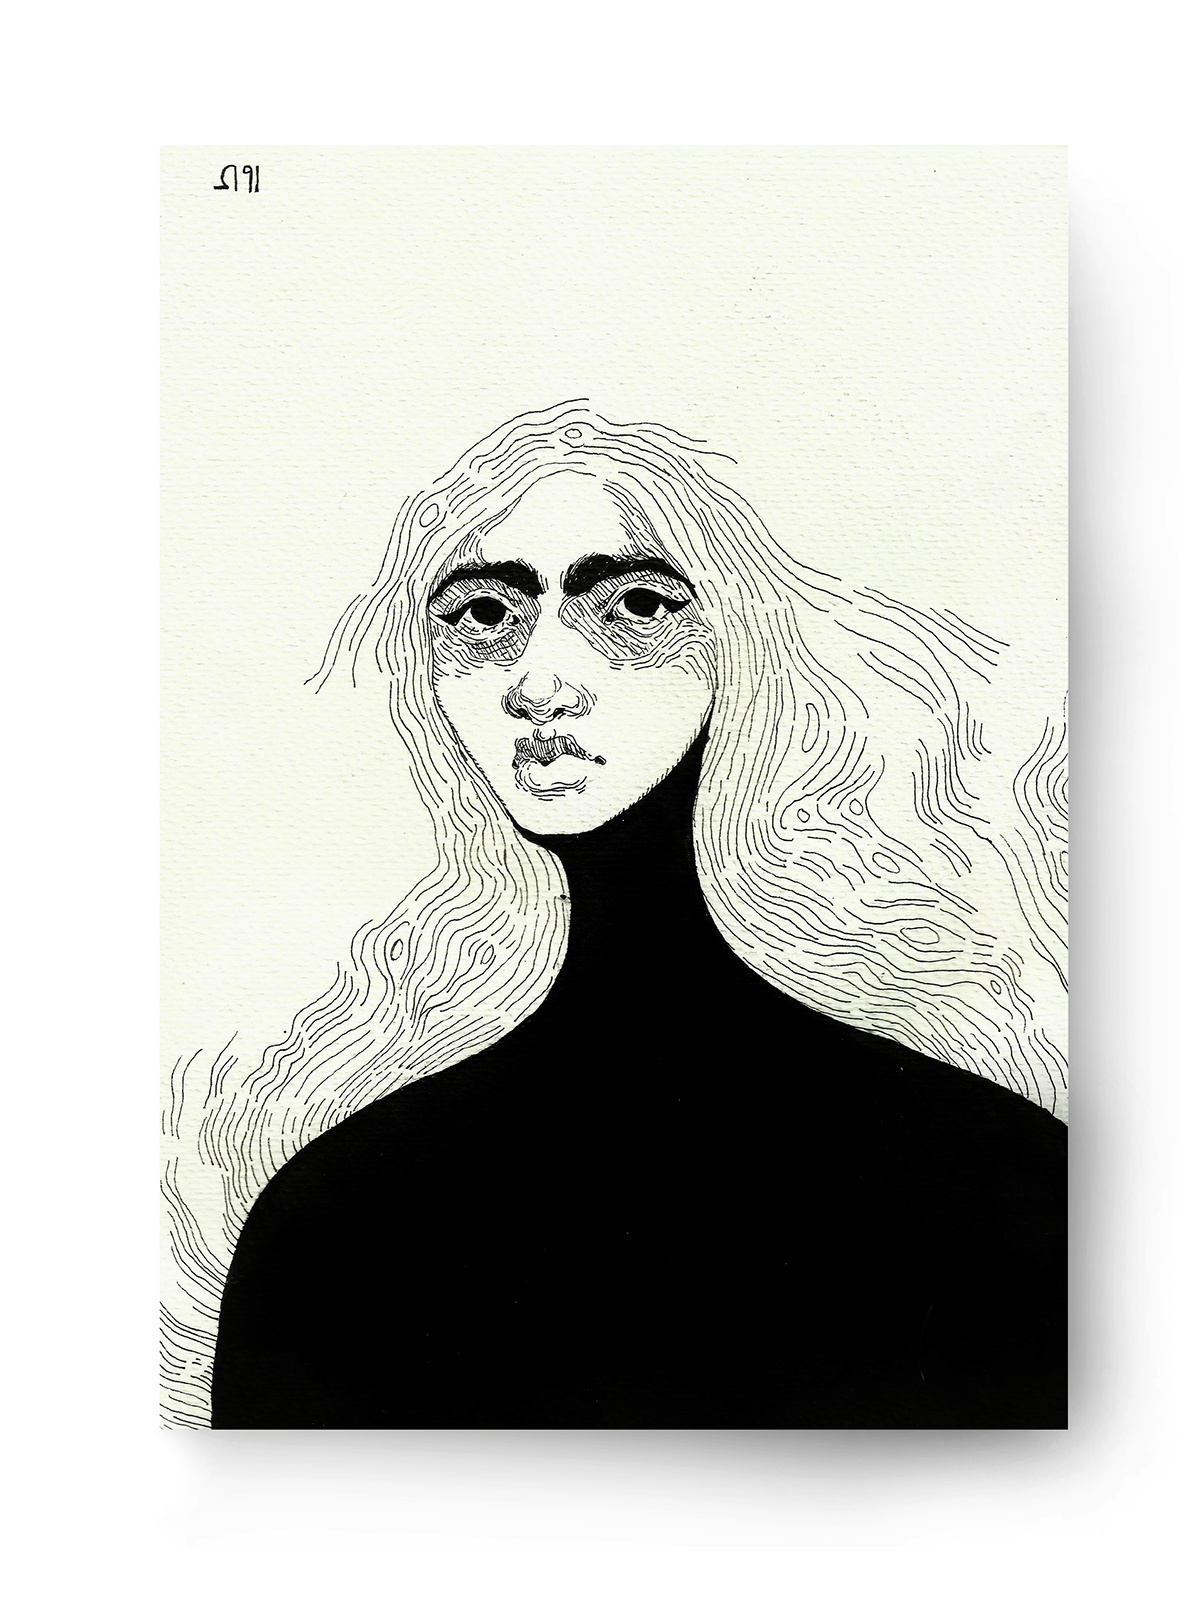 ILLUSTRATION  portraits conceptual art hands faces transparent black and white inked